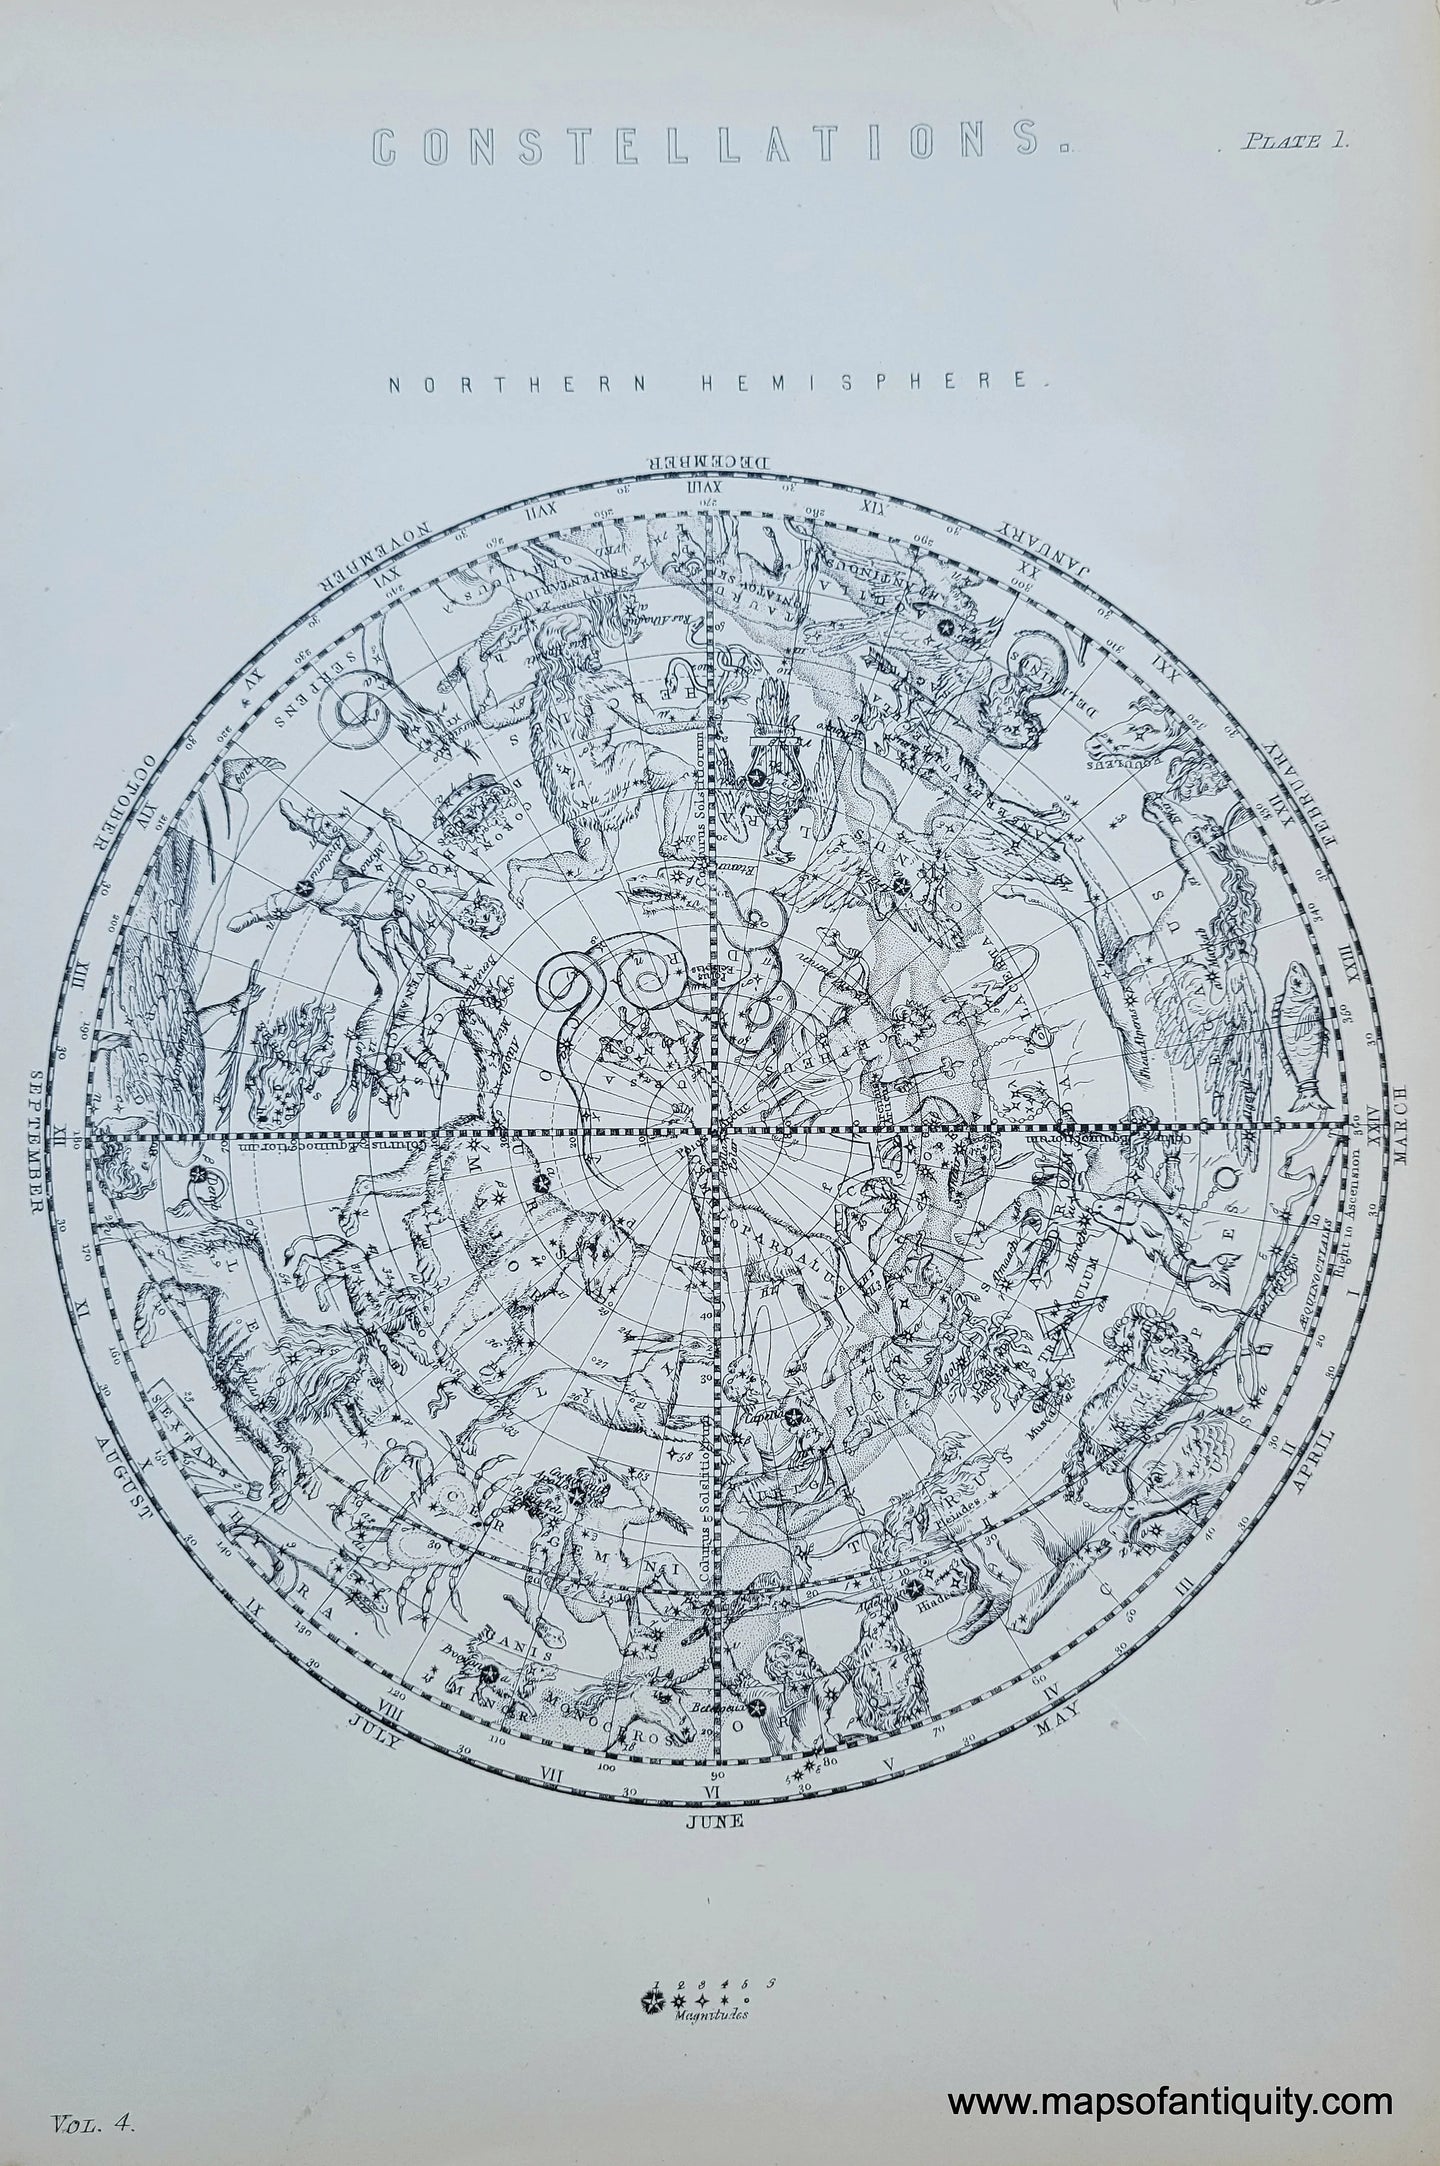 Genuine-Antique-Print-Constellations-Northern-Hemisphere-1870-unknown-Maps-Of-Antiquity